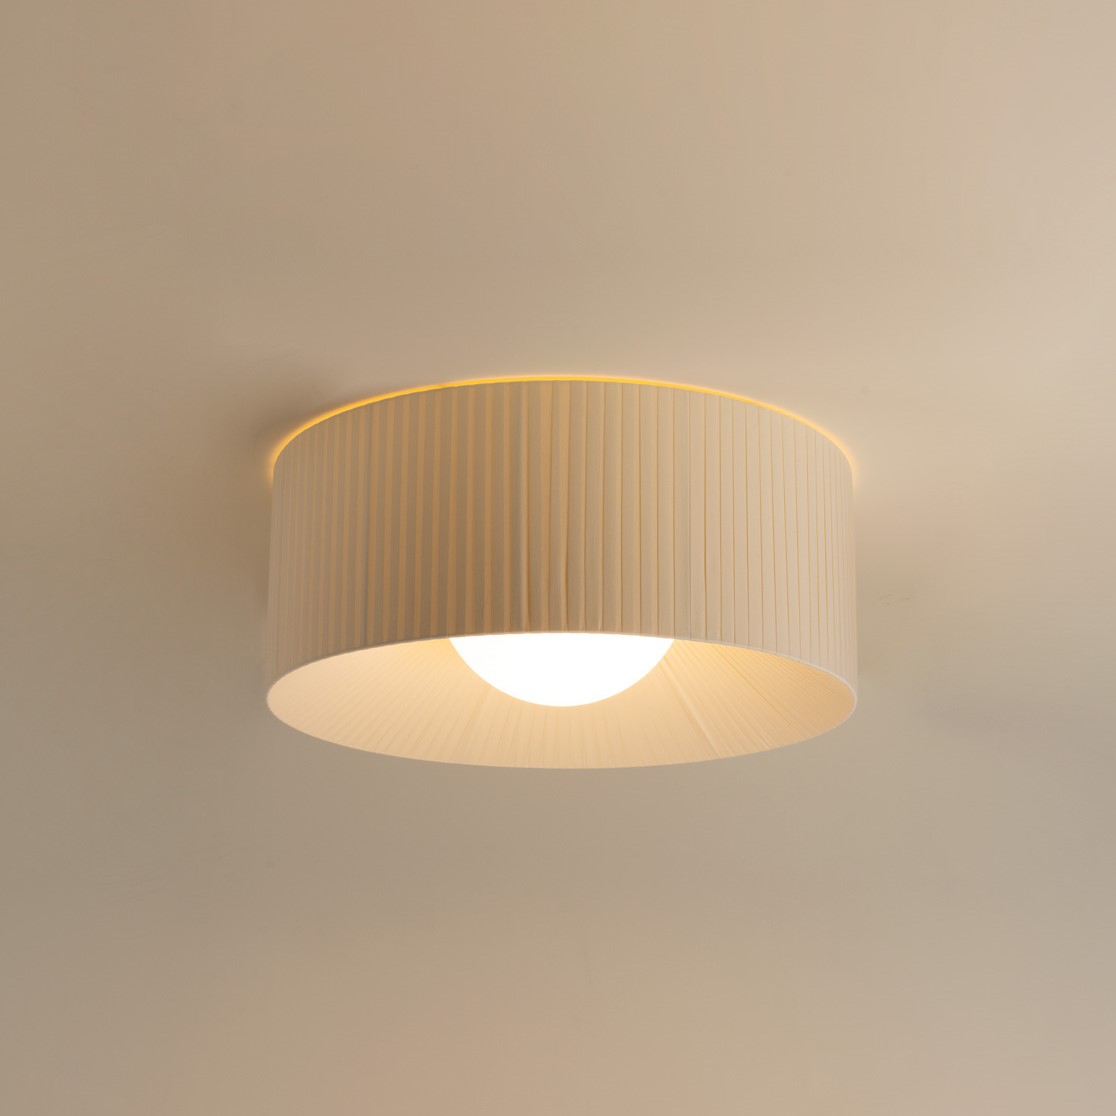 Lap ceiling lamp